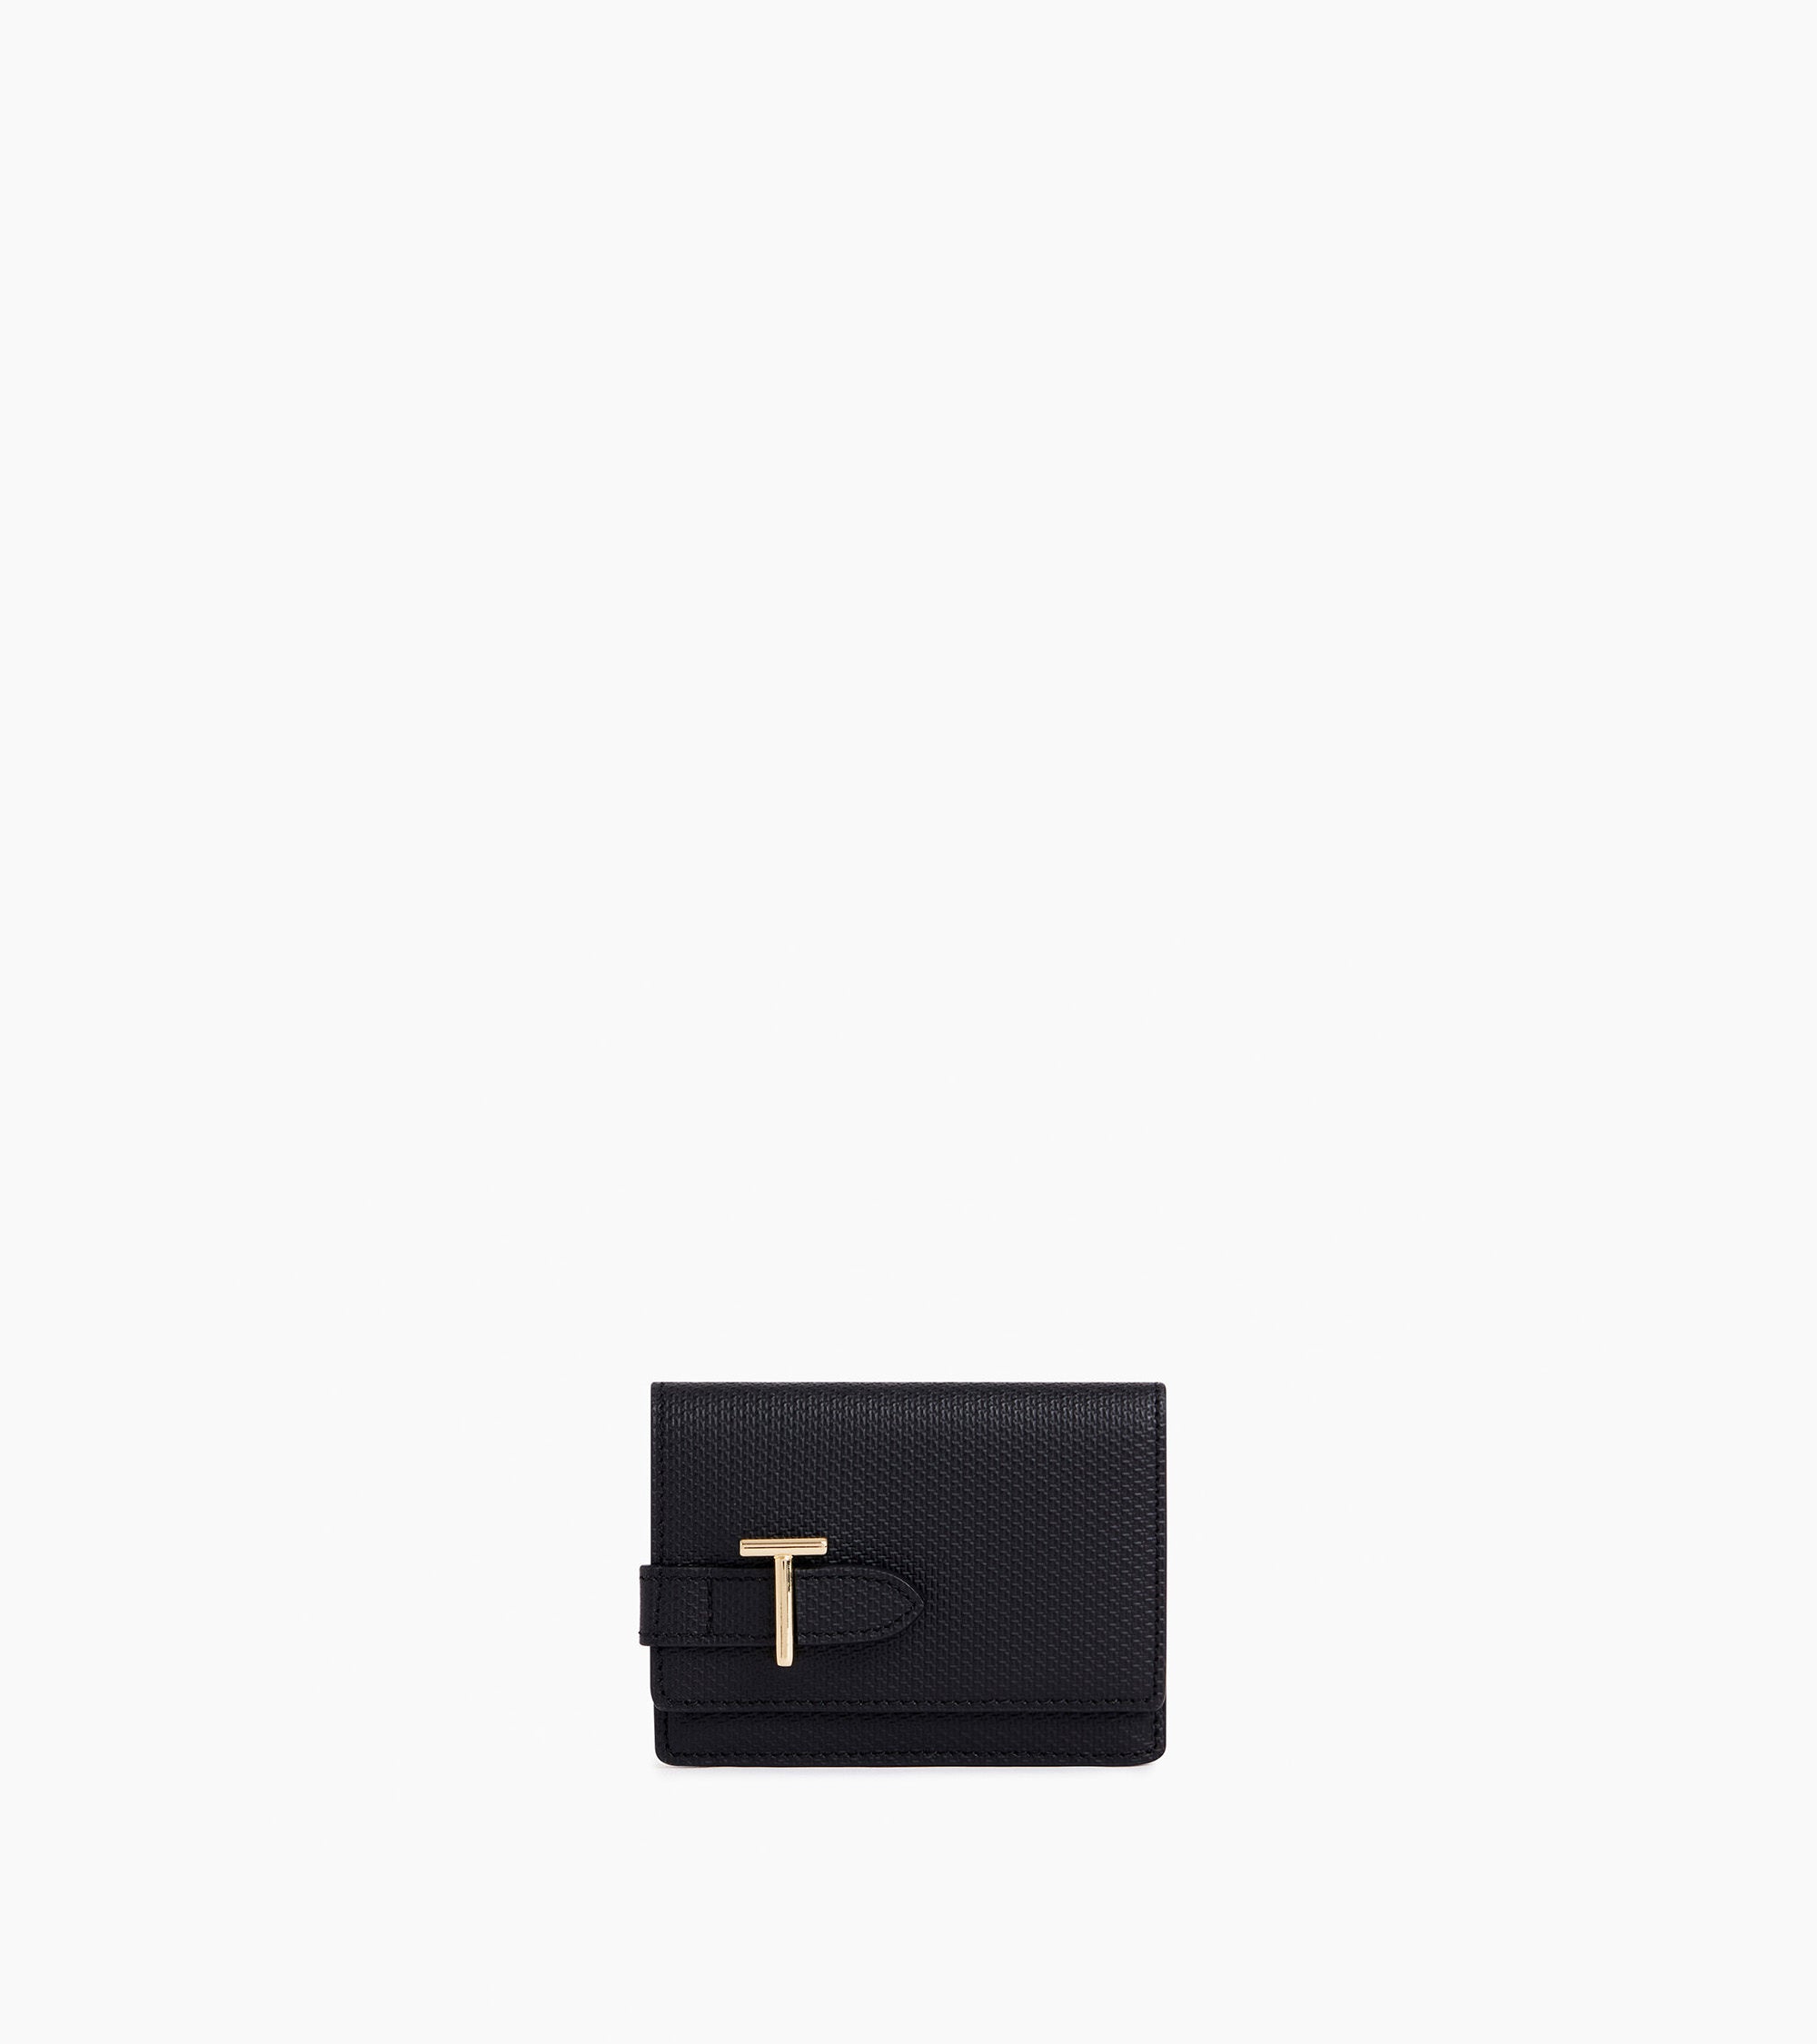 Emilie flap cardholder in signature T leather